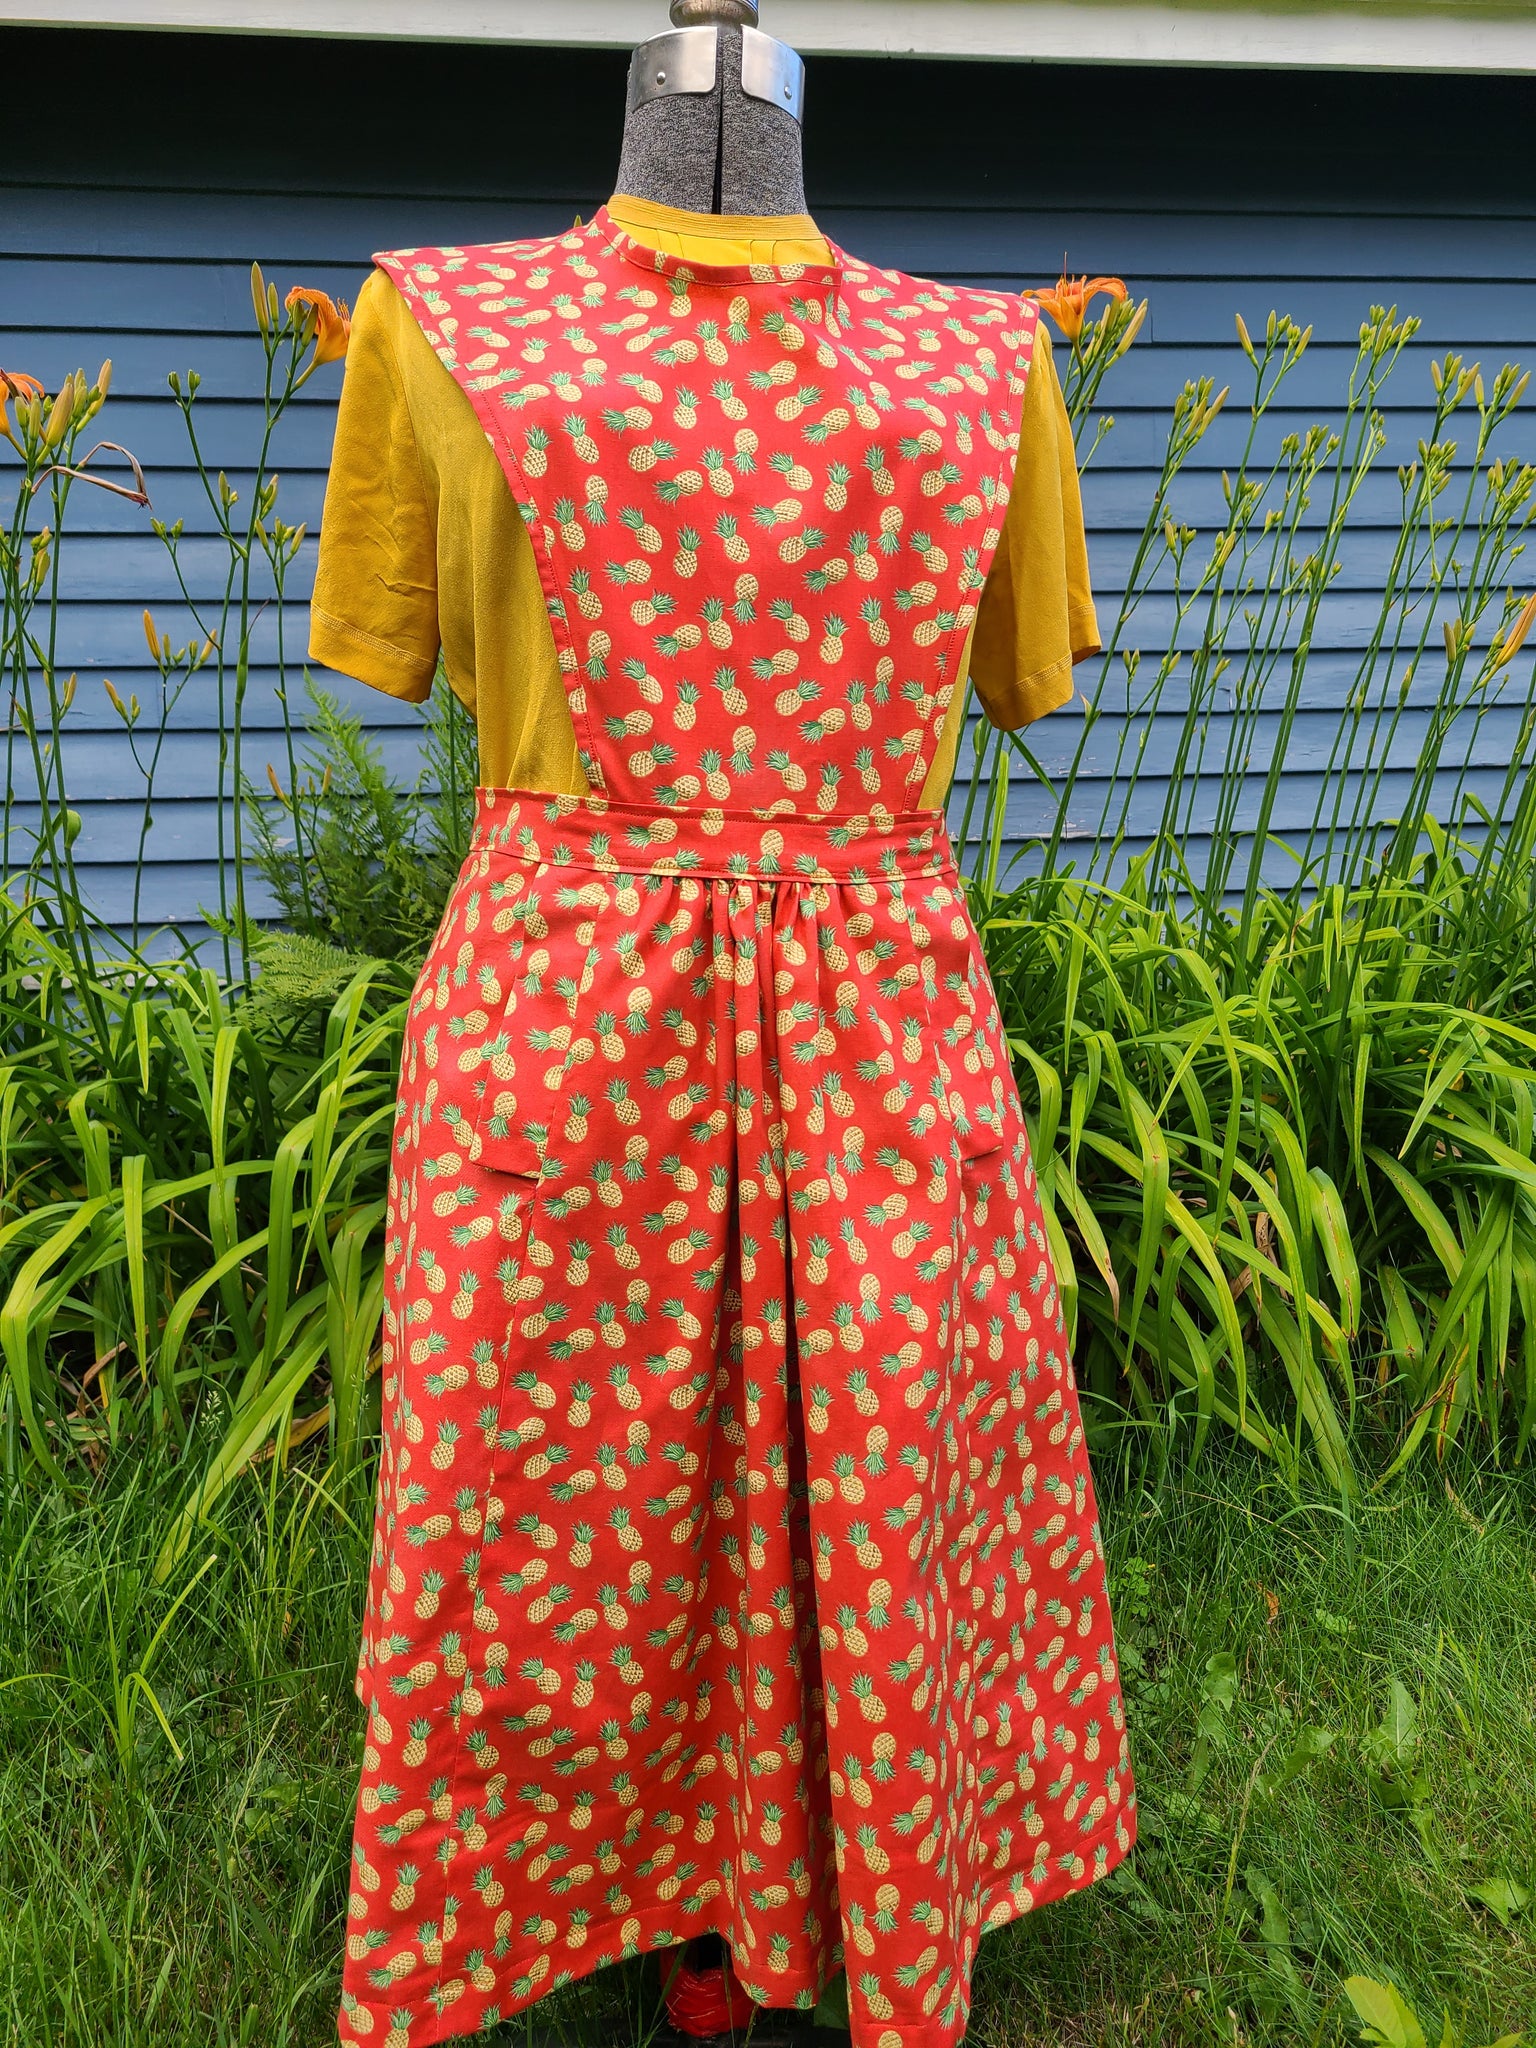 Introducing The Ivy Pinafore Dress Sewing Pattern | Jennifer Lauren Handmade